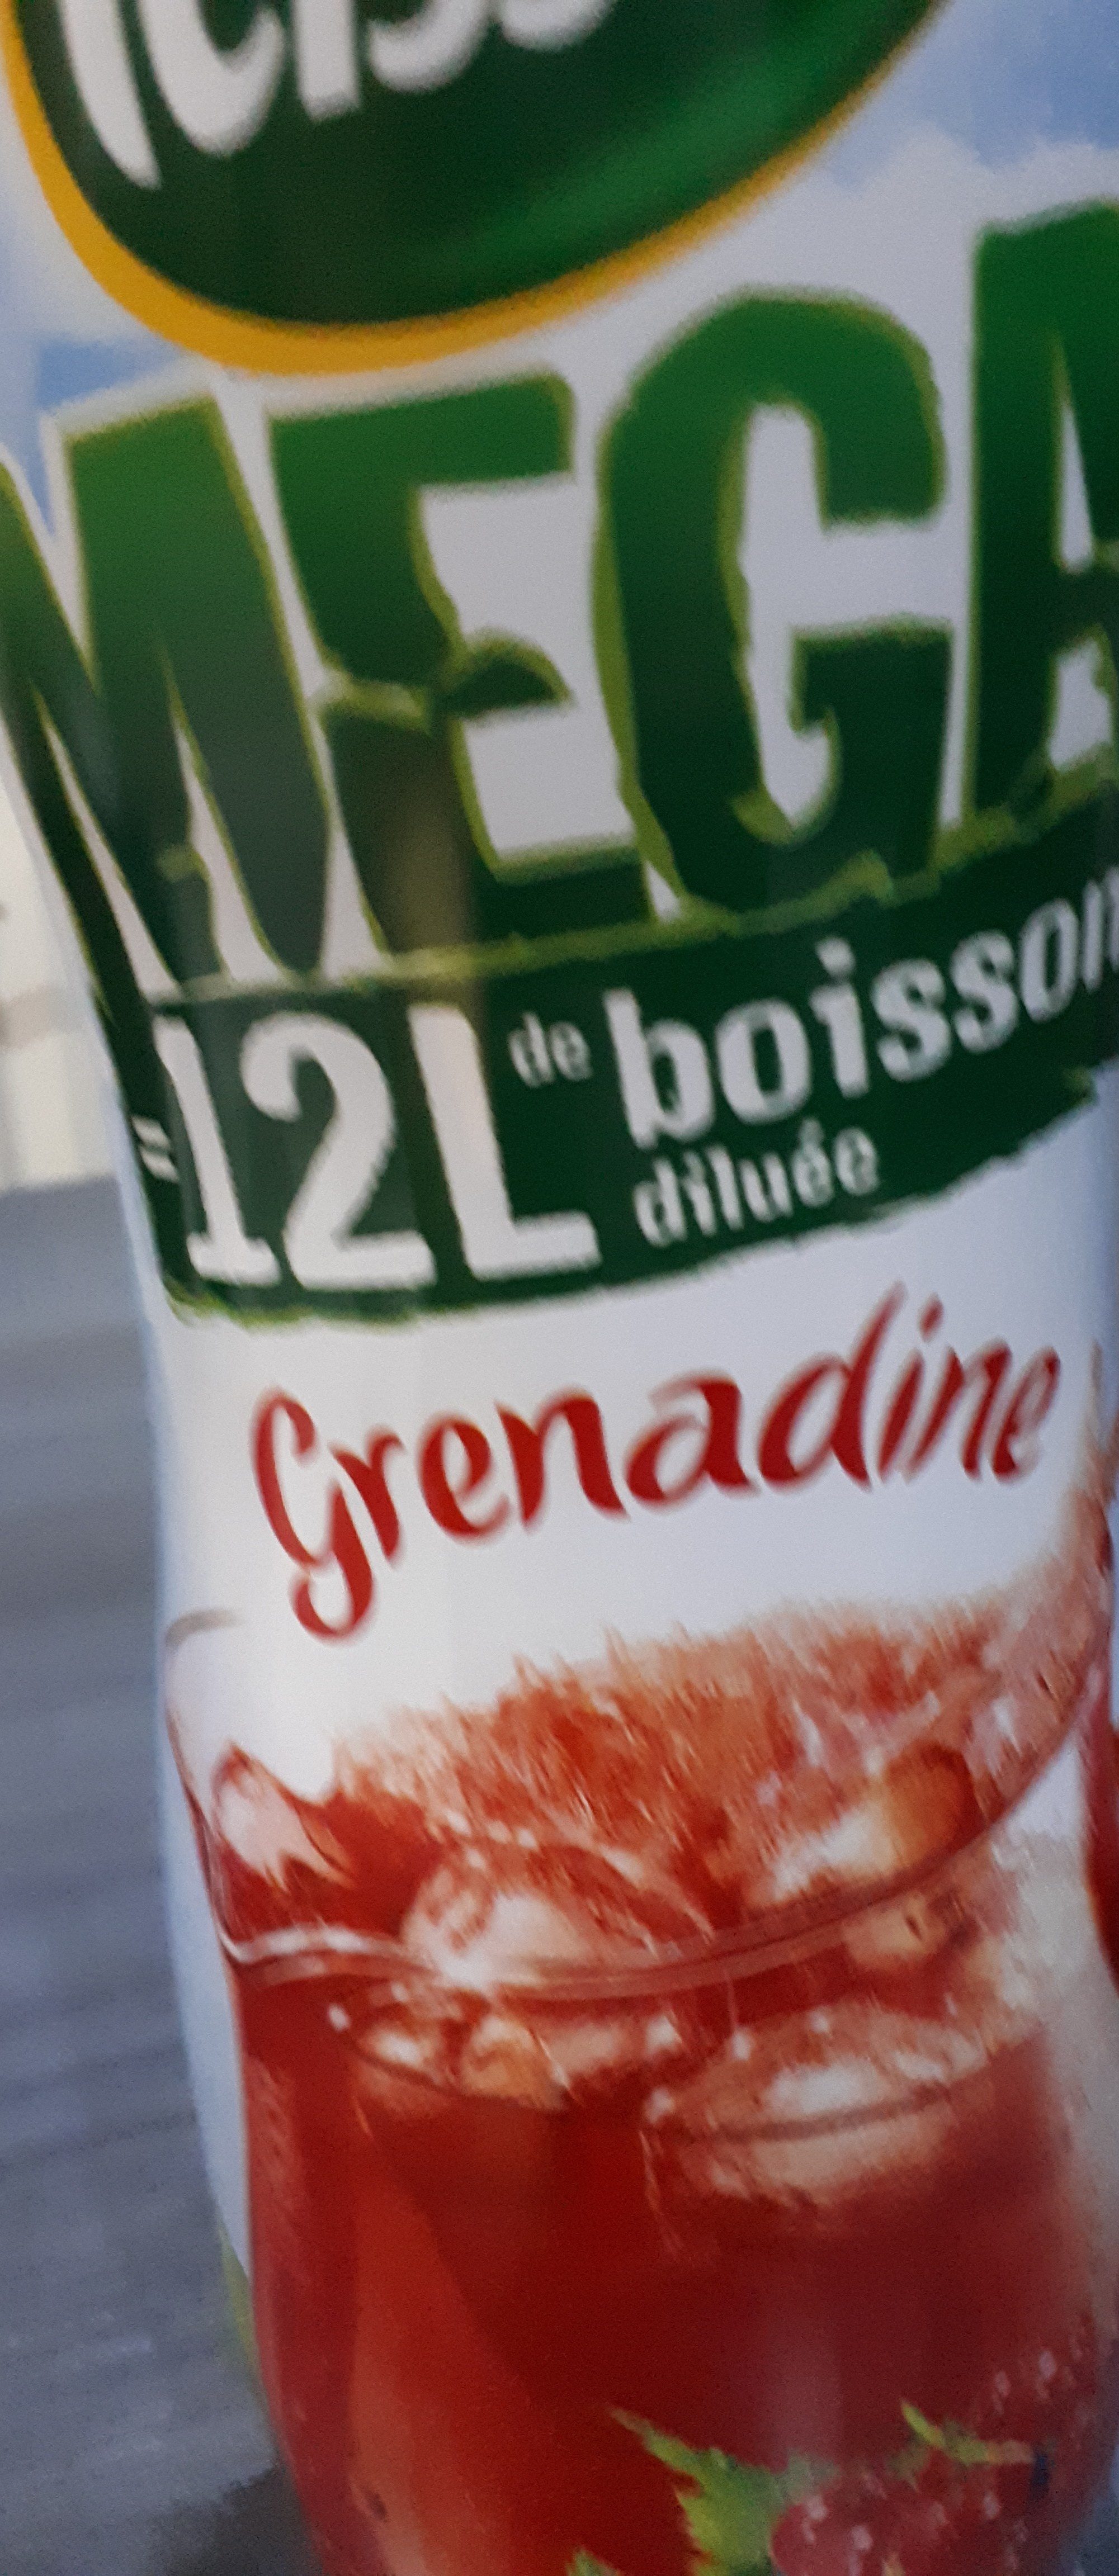 sirop grenadine - Product - fr